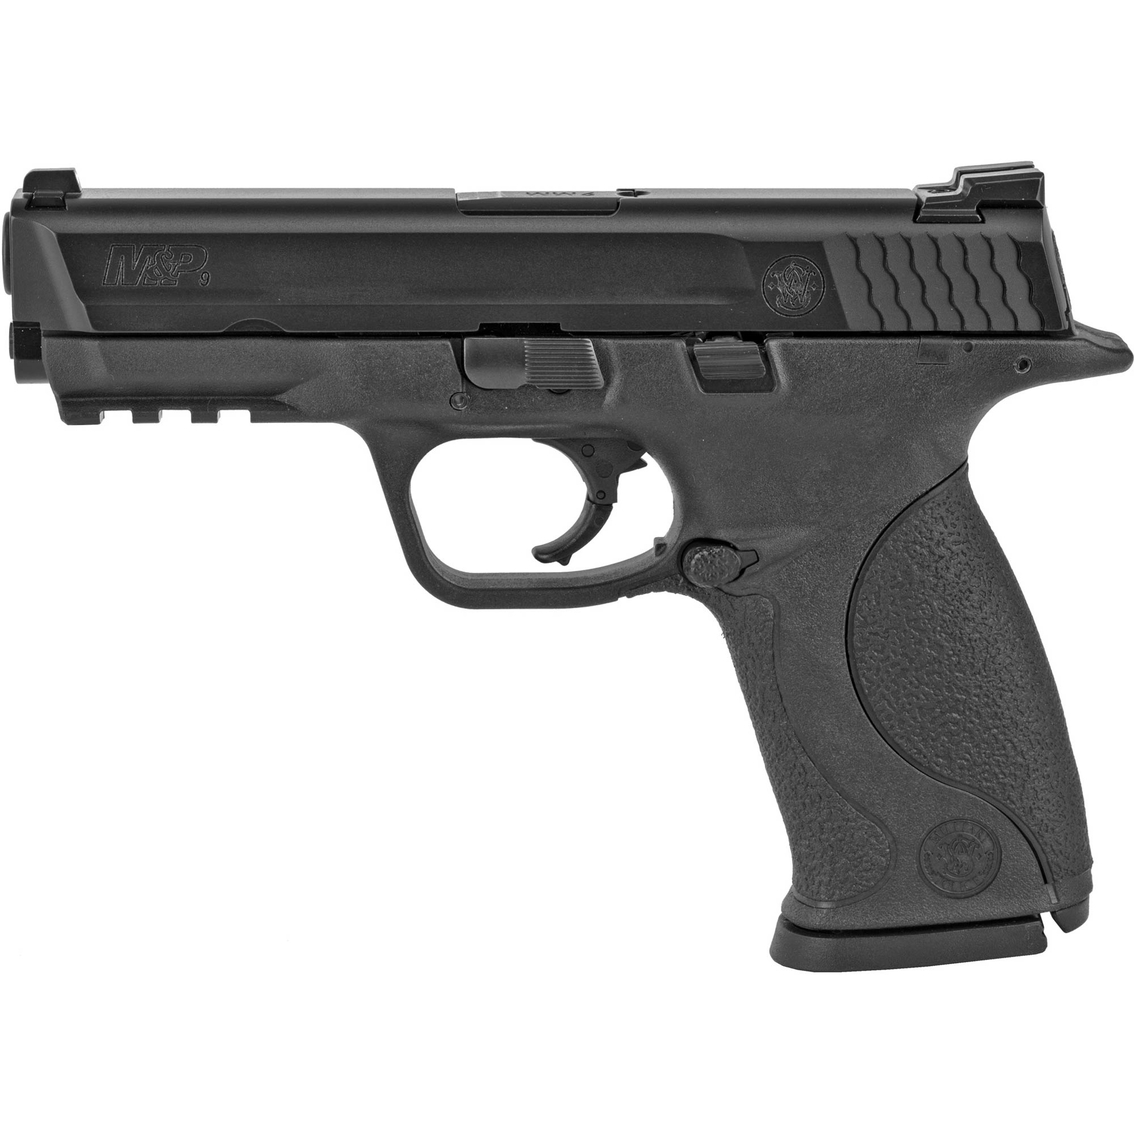 S&W M&P 9mm 4.25 in. Barrel 17 Rnd 2 Mag Pistol Black - Image 2 of 3